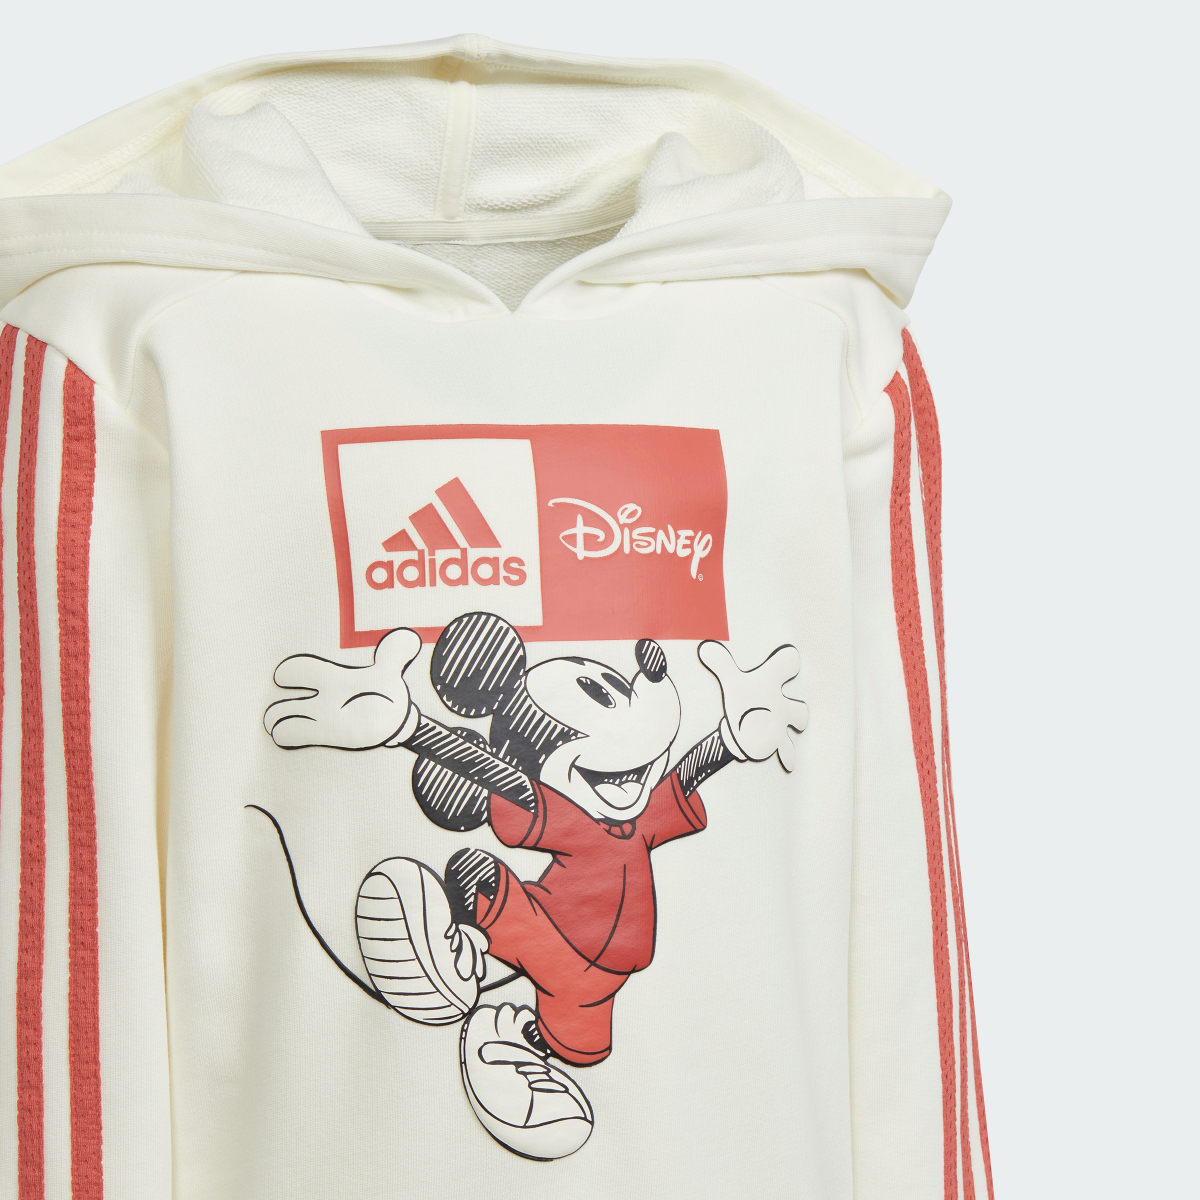 Adidas Conjunto com Capuz Rato Mickey adidas x Disney. 7